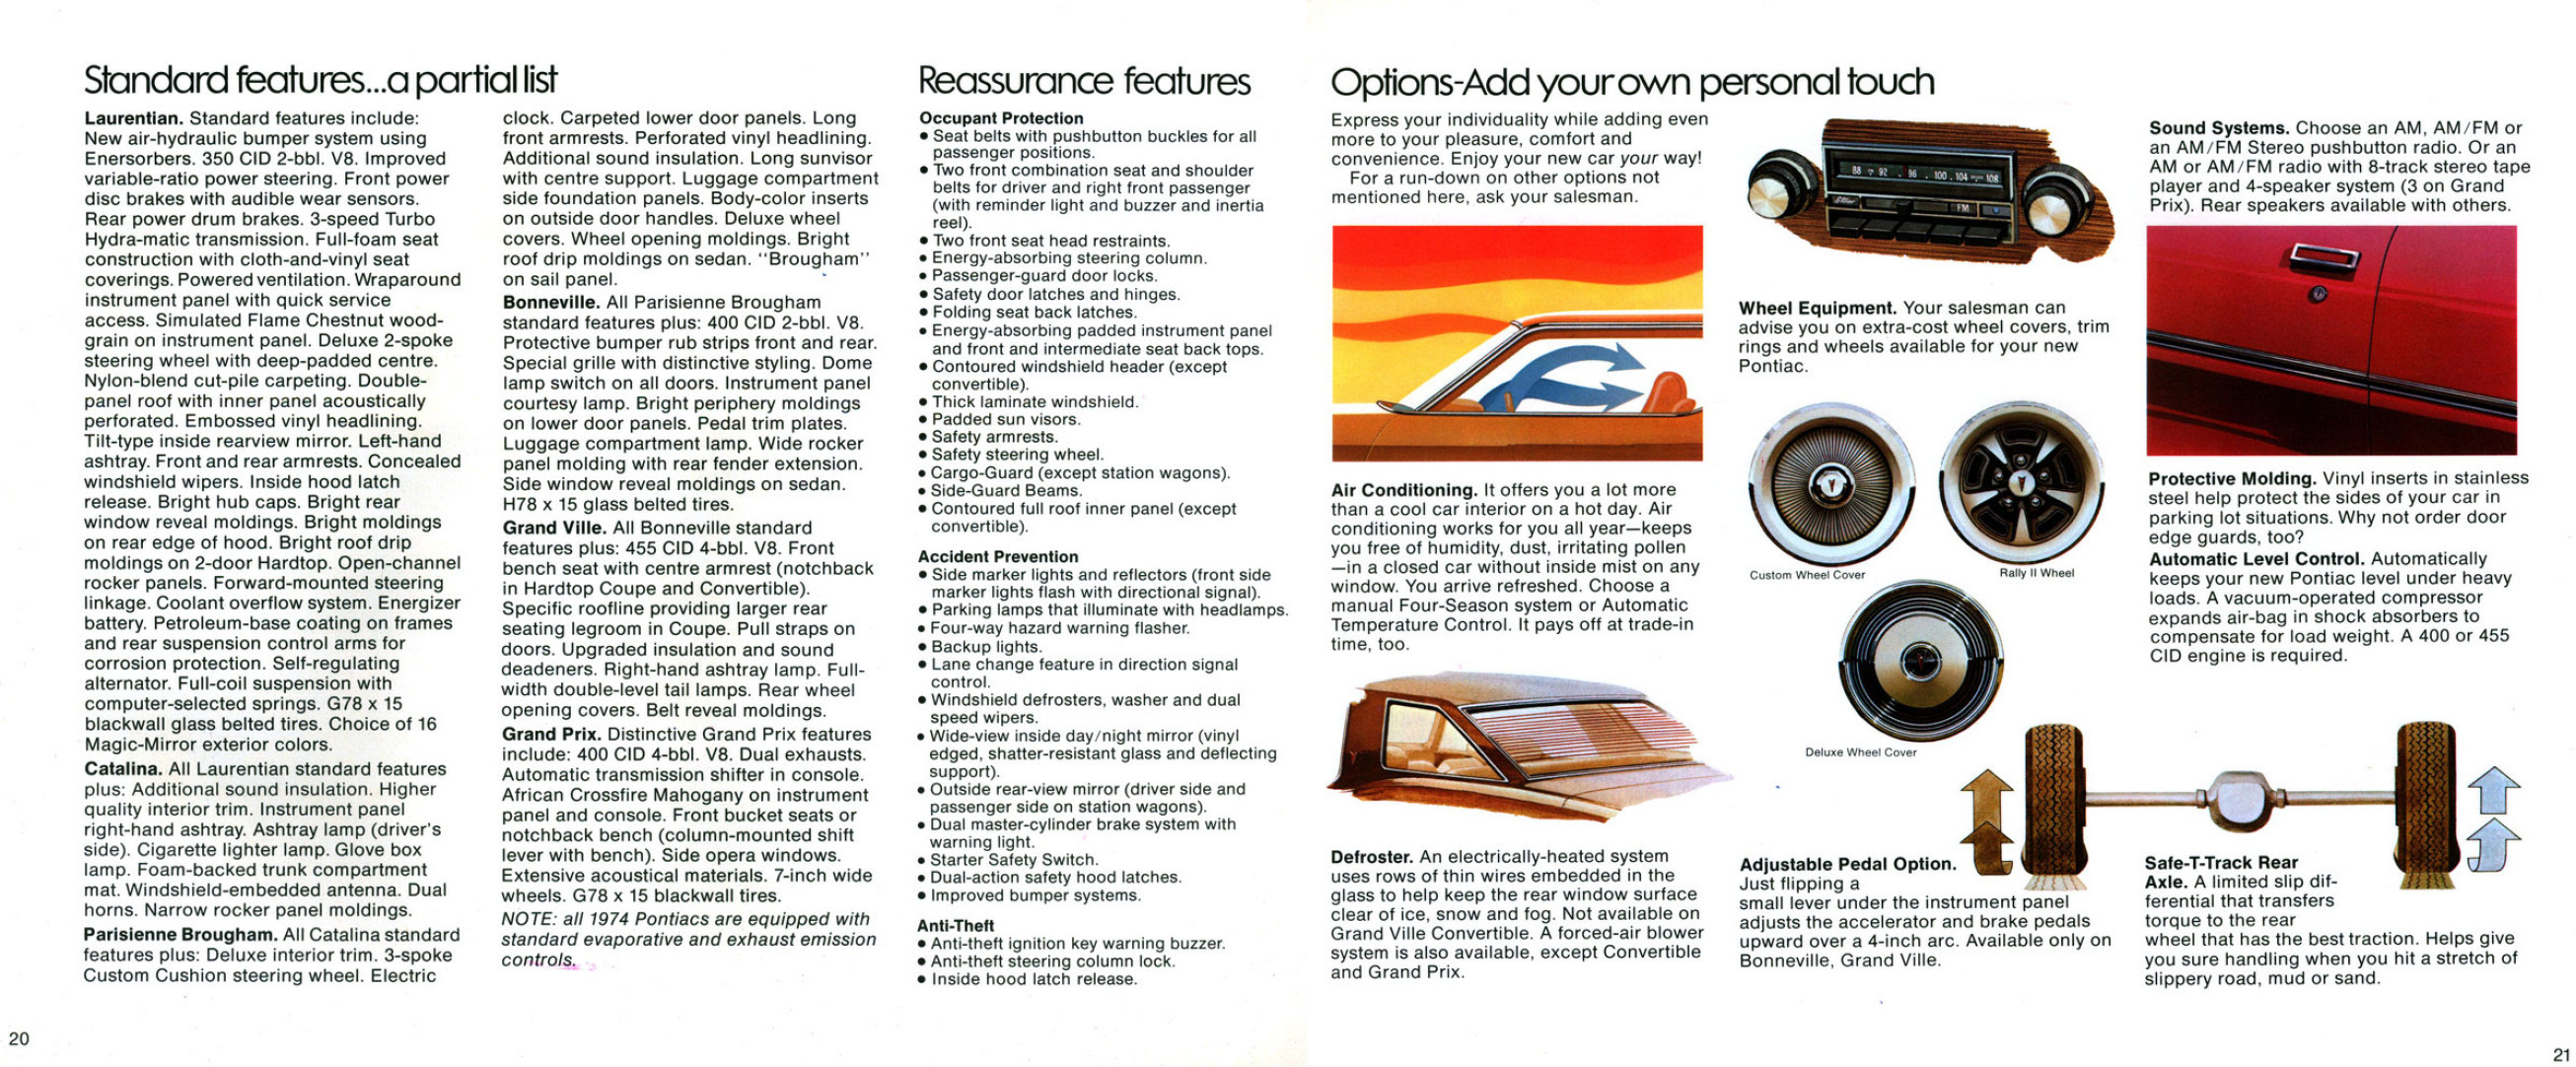 1974 Pontiac Full Size Brochure